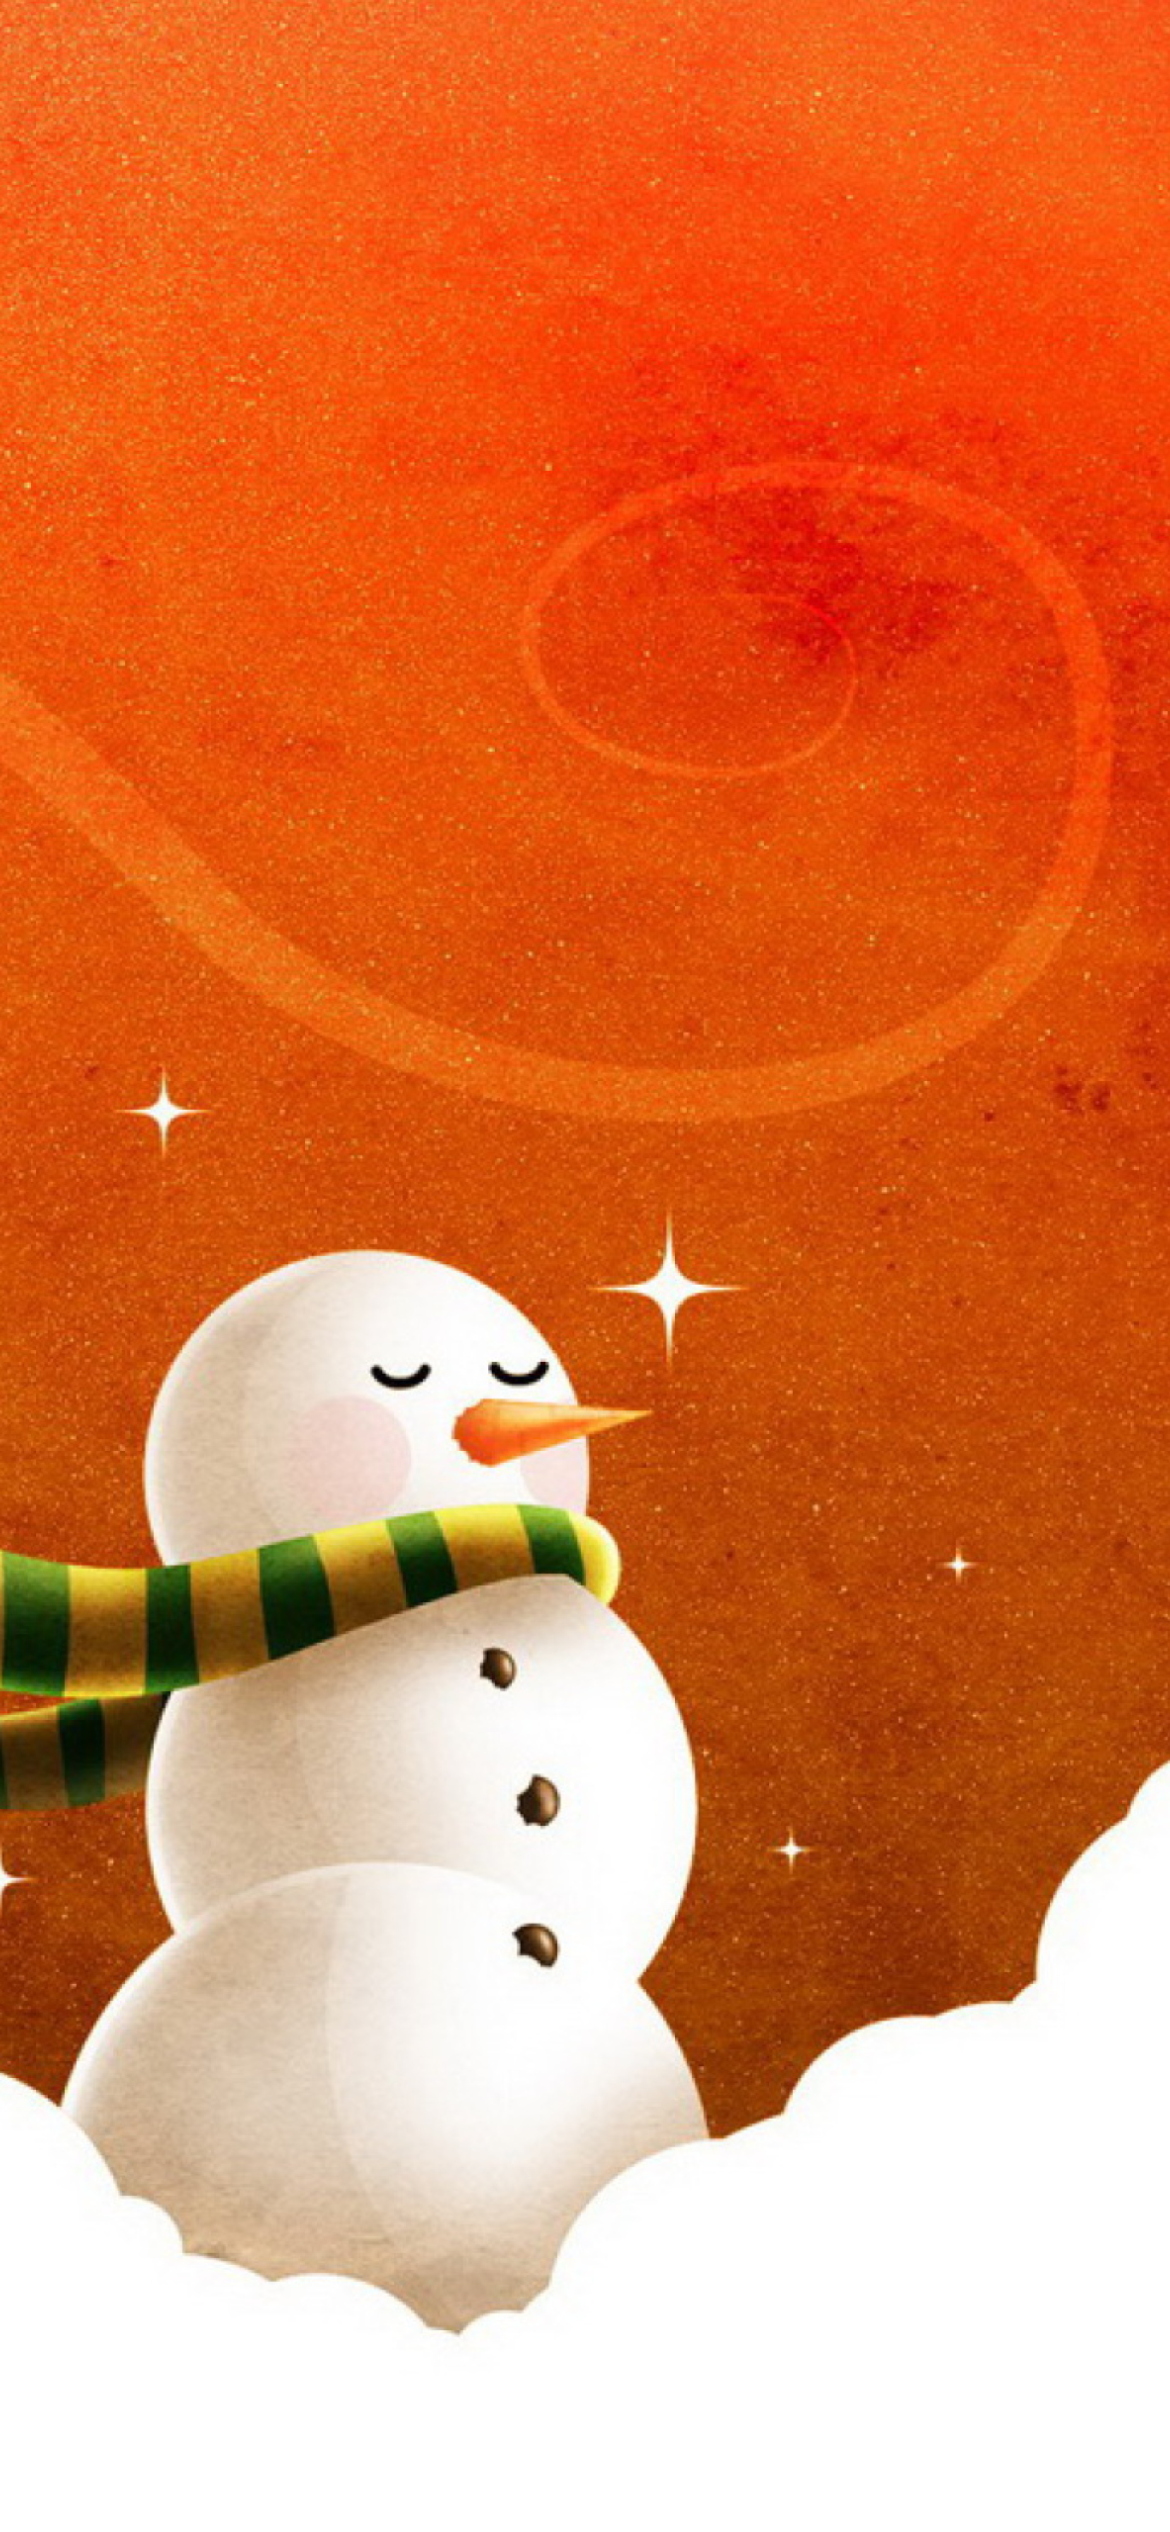 Snowman wallpaper 1170x2532